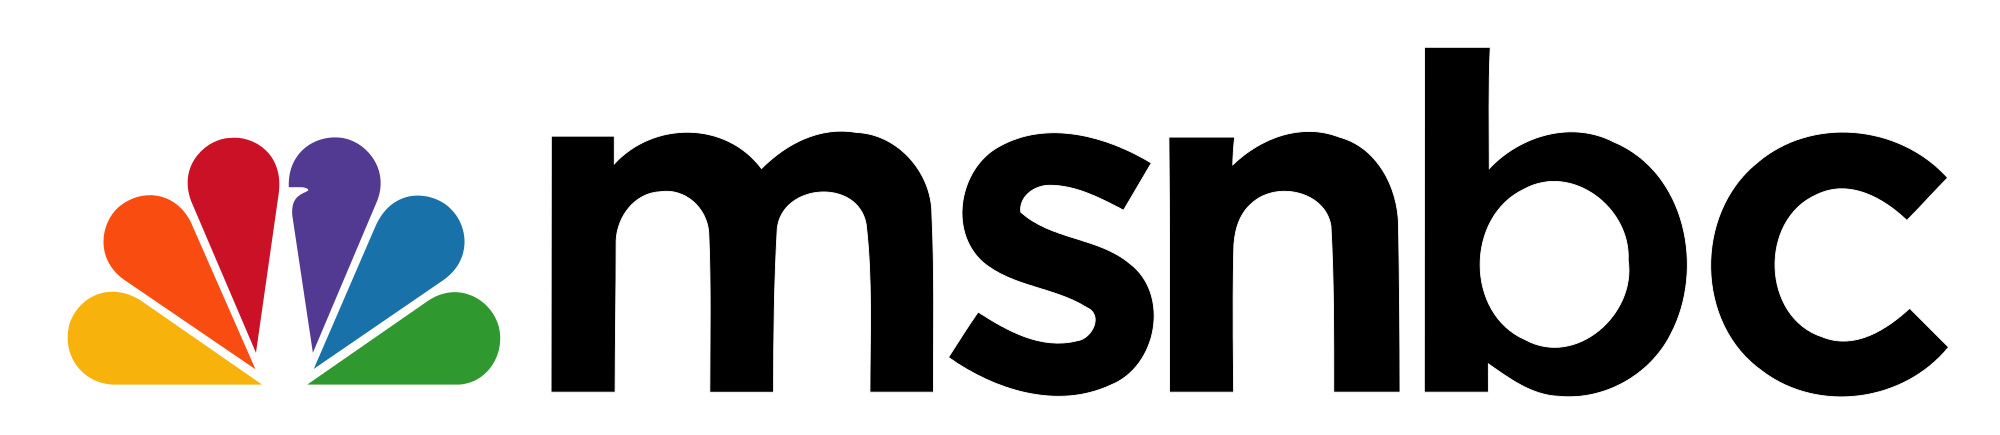 Msnbc picture: MSNBC Logo jpg